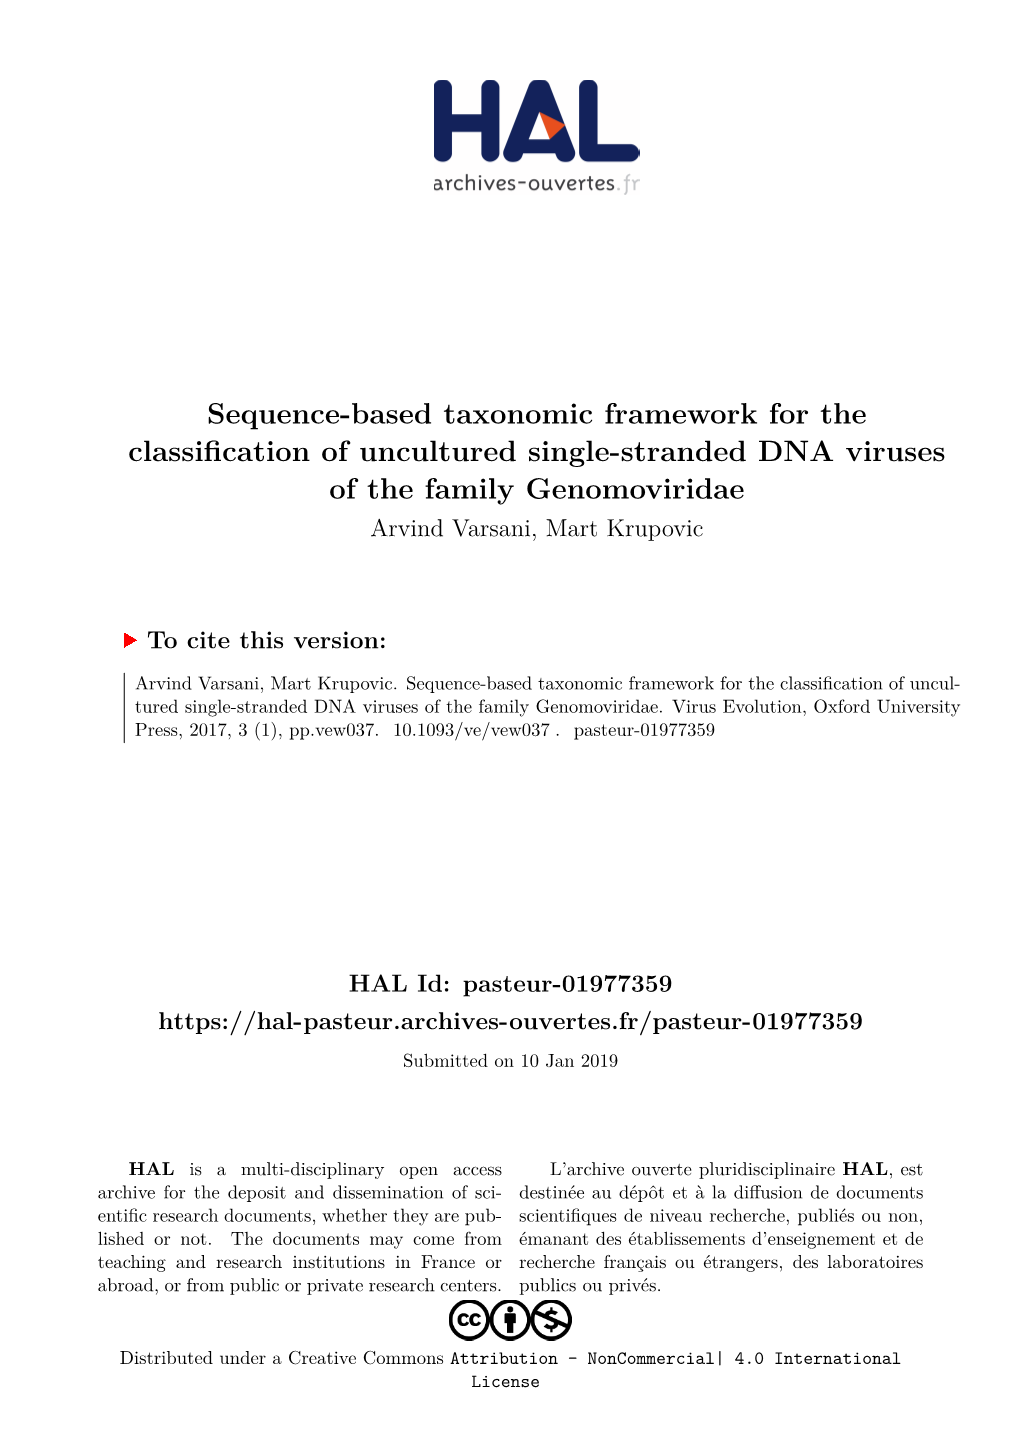 Sequence-Based Taxonomic Framework for the Classification of Uncultured Single-Stranded DNA Viruses of the Family Genomoviridae Arvind Varsani, Mart Krupovic